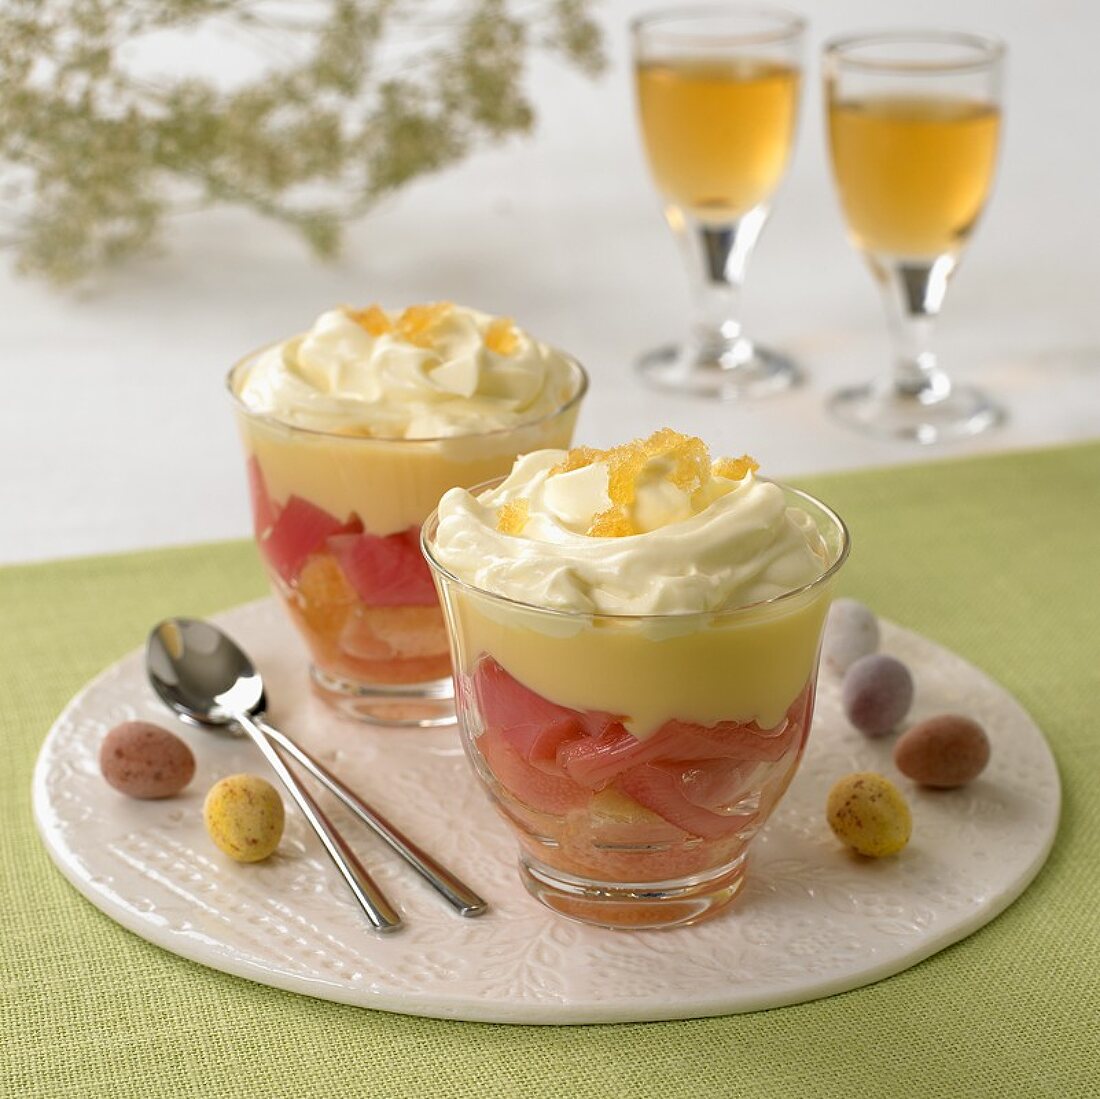 Rhubarb trifle with custard and cream